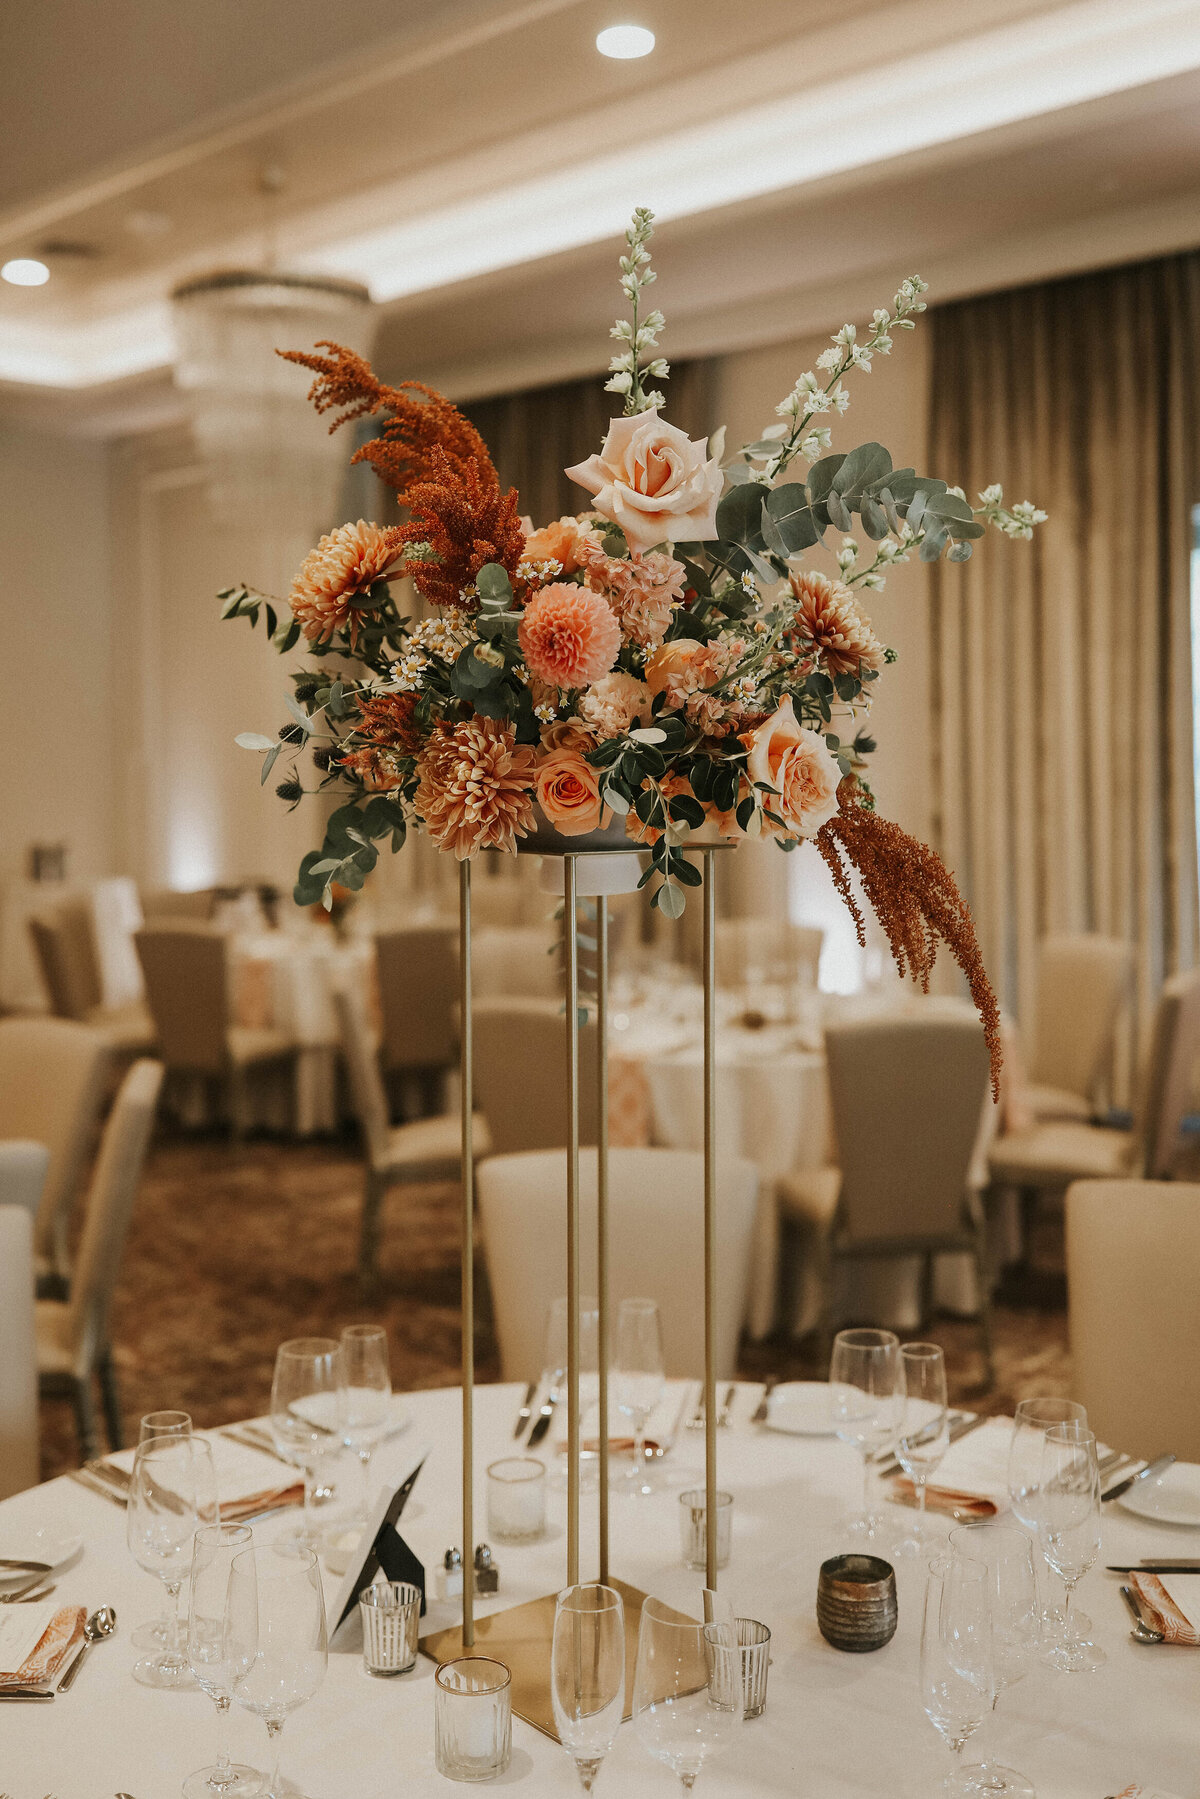 delamar-hotel-west-hartford-ct-wedding-flowers-tableware-rentals-petals-plates-BZ1A2070